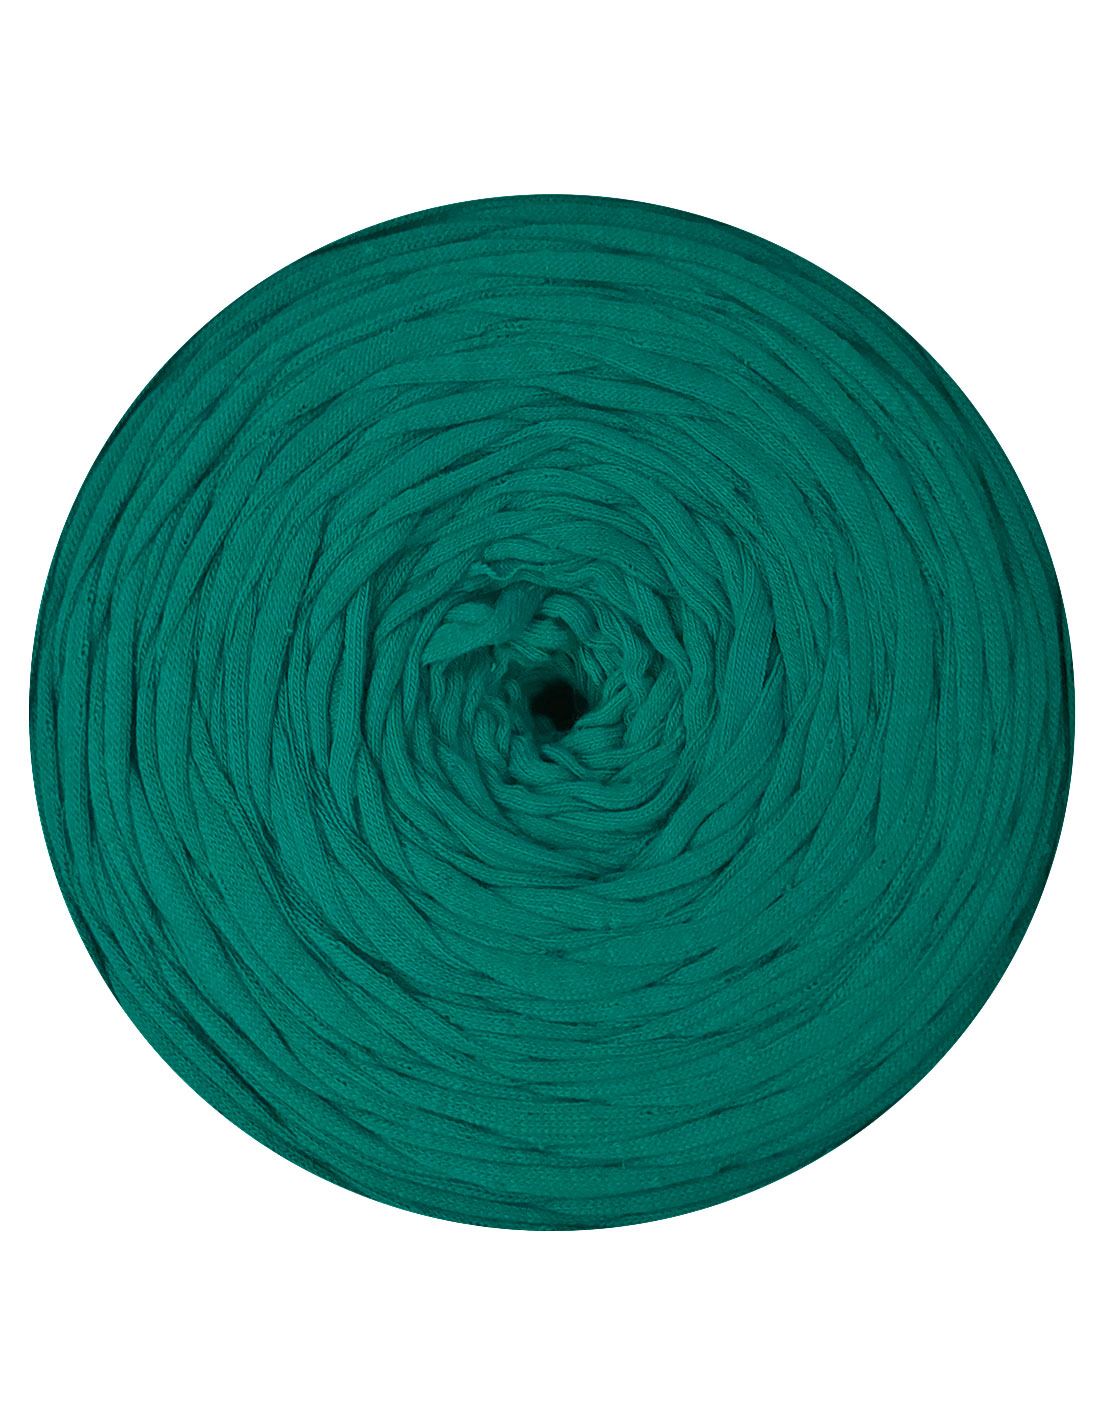 Bright teal t-shirt yarn (100-120m)